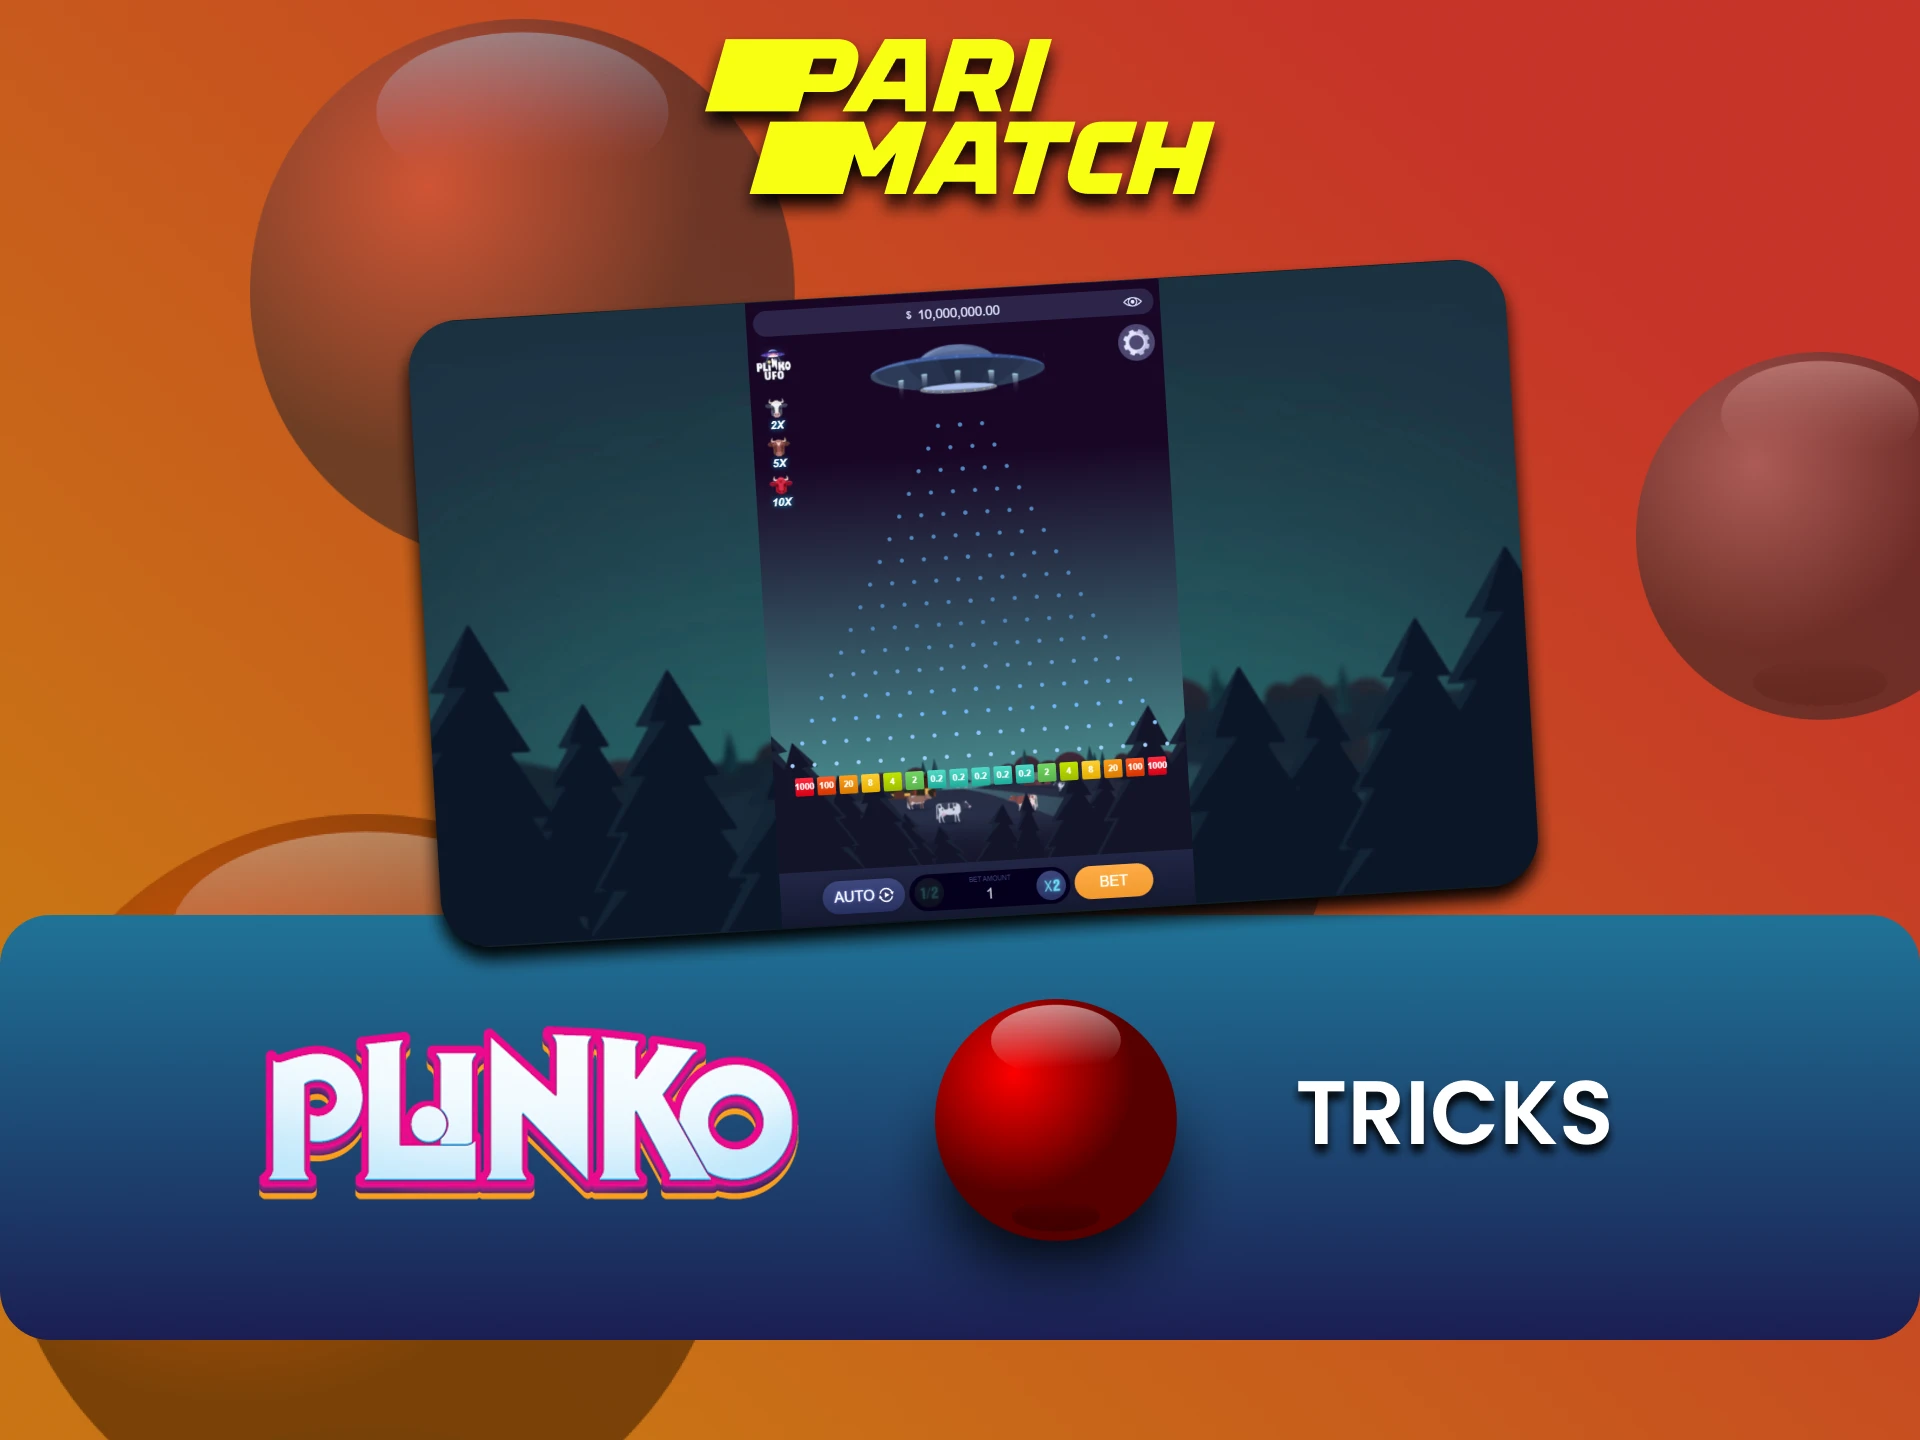 Find out tricks for winning Plinko on Parimatch.